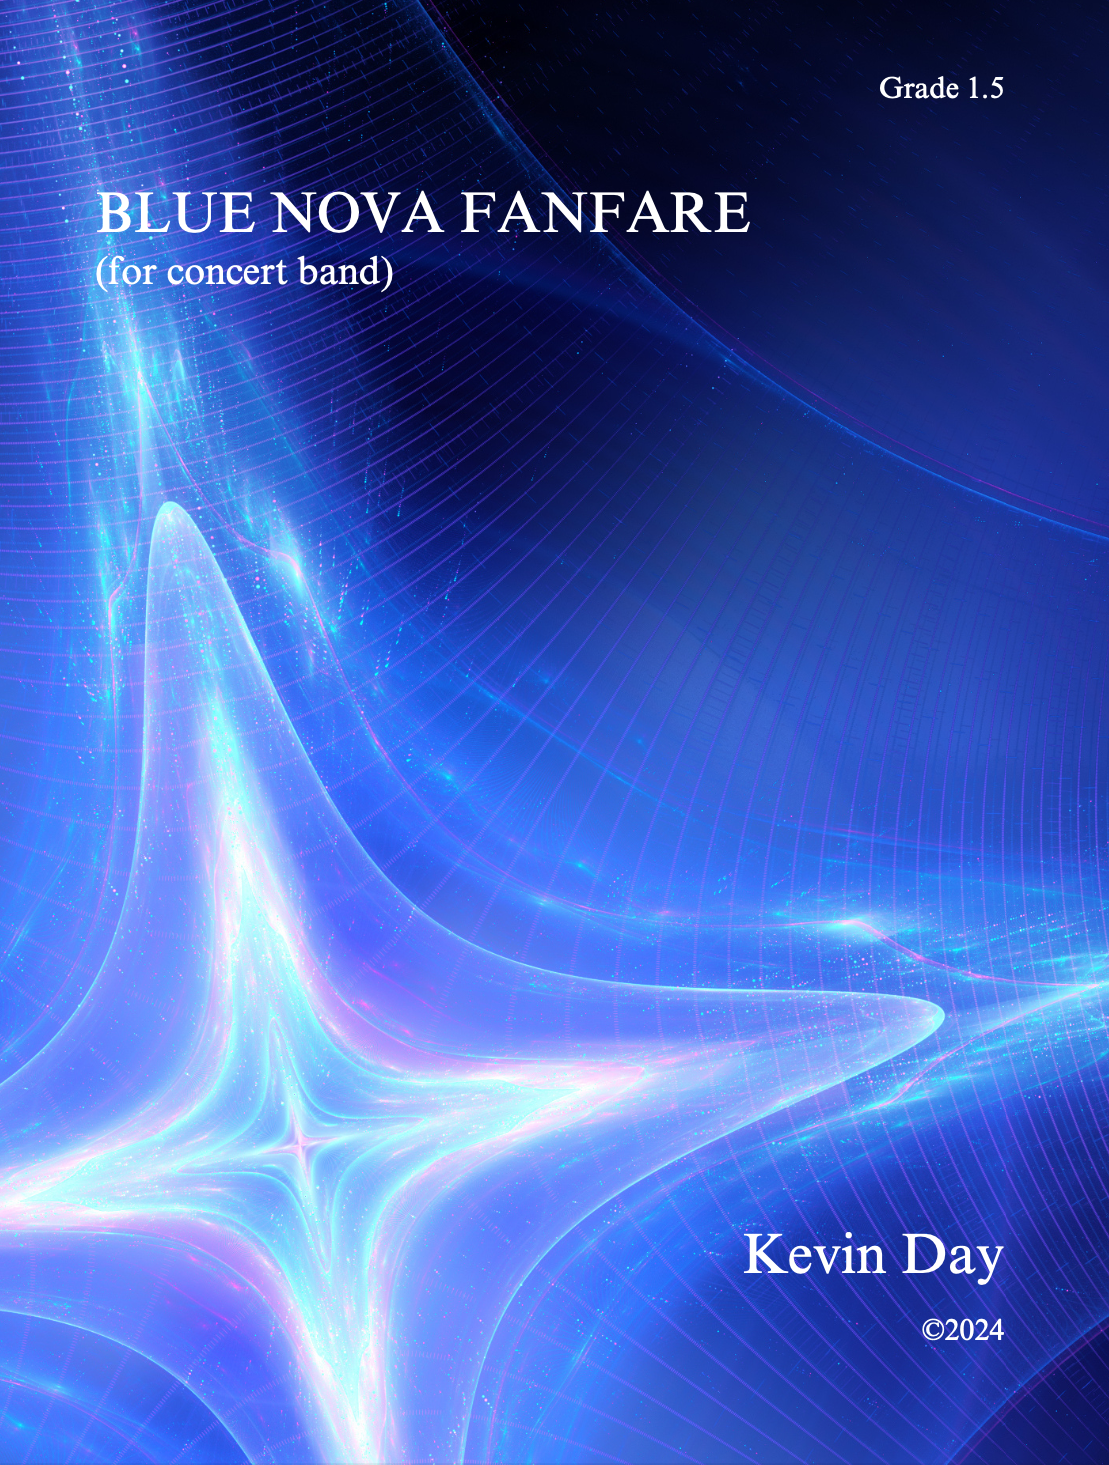 Blue Nova Fanfare by Kevin Day